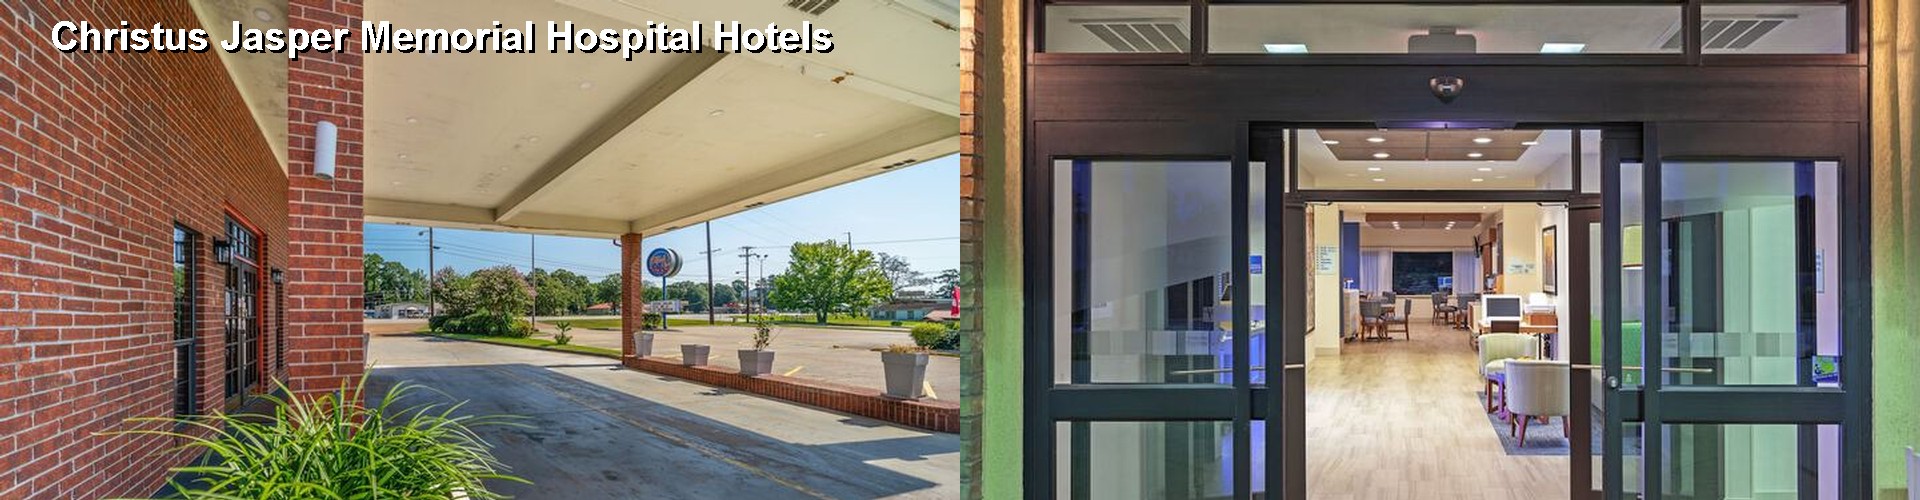 2 Best Hotels near Christus Jasper Memorial Hospital